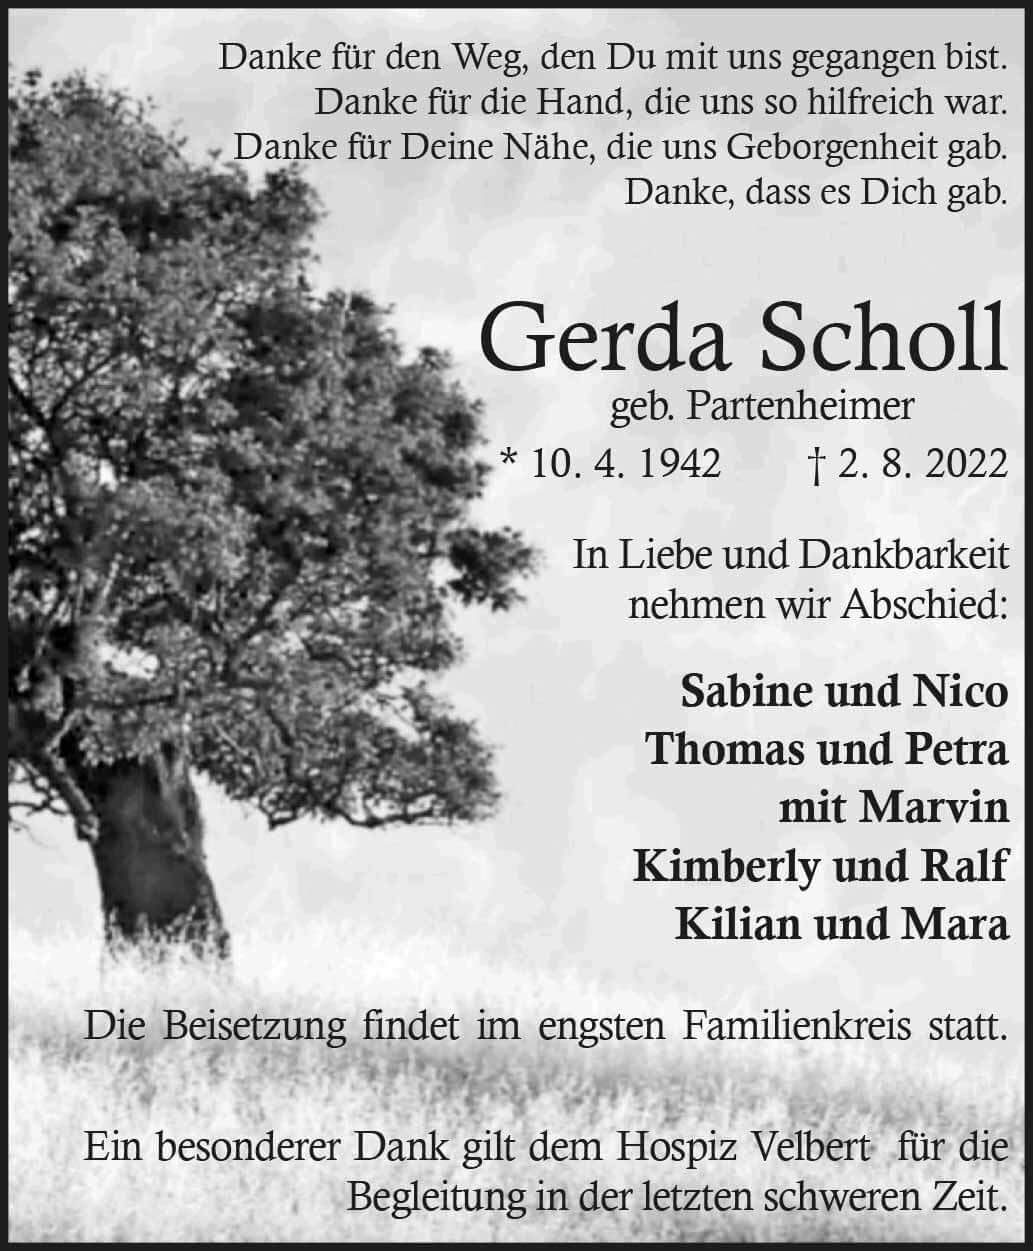 Gerda Scholl † 2. 8. 2022